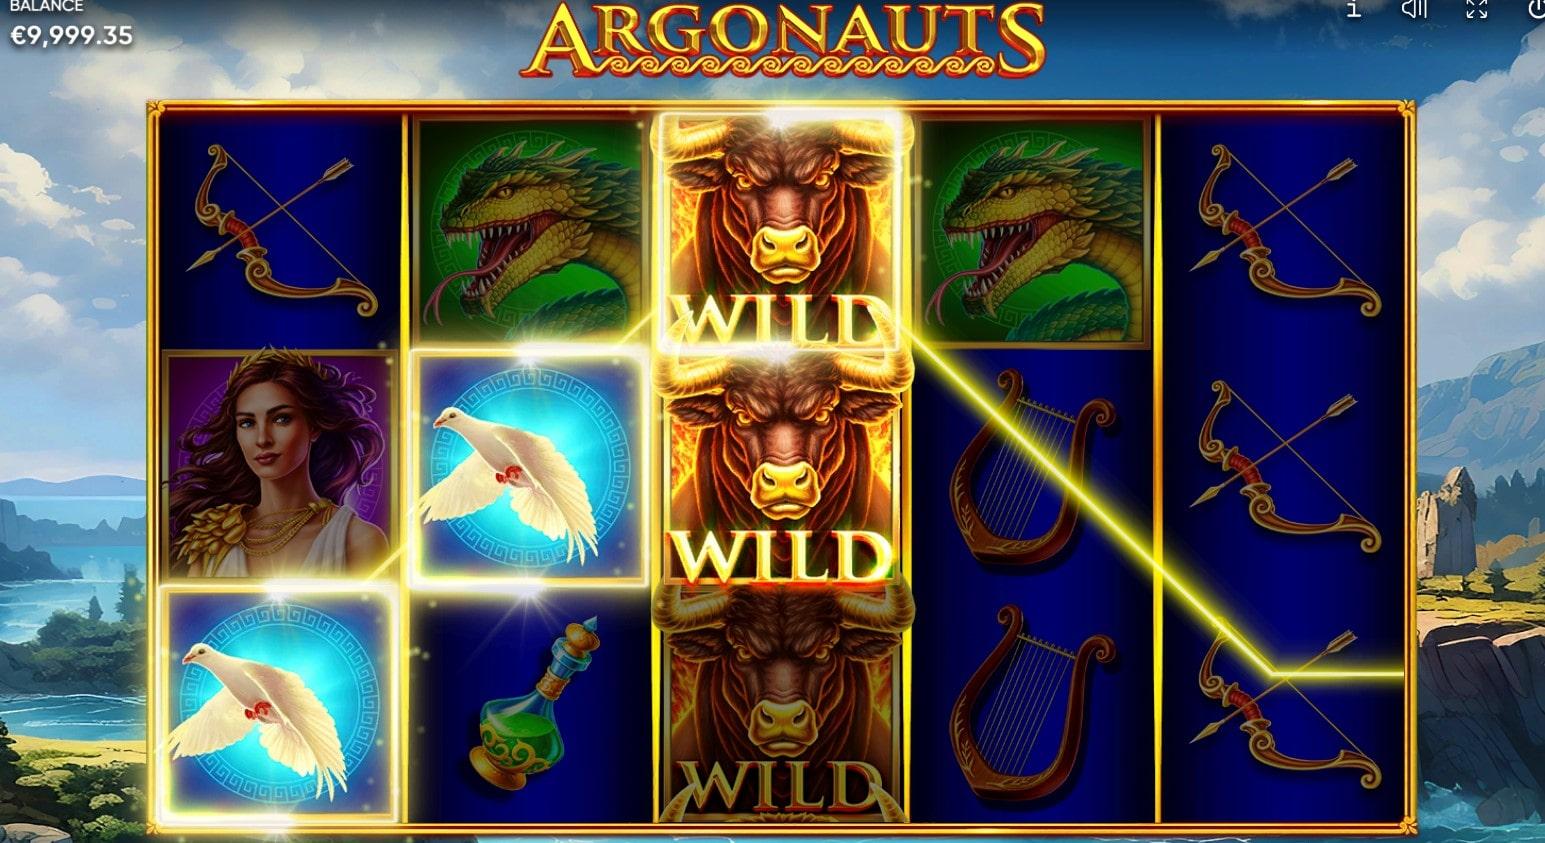 The Argonauts slot wild symbol